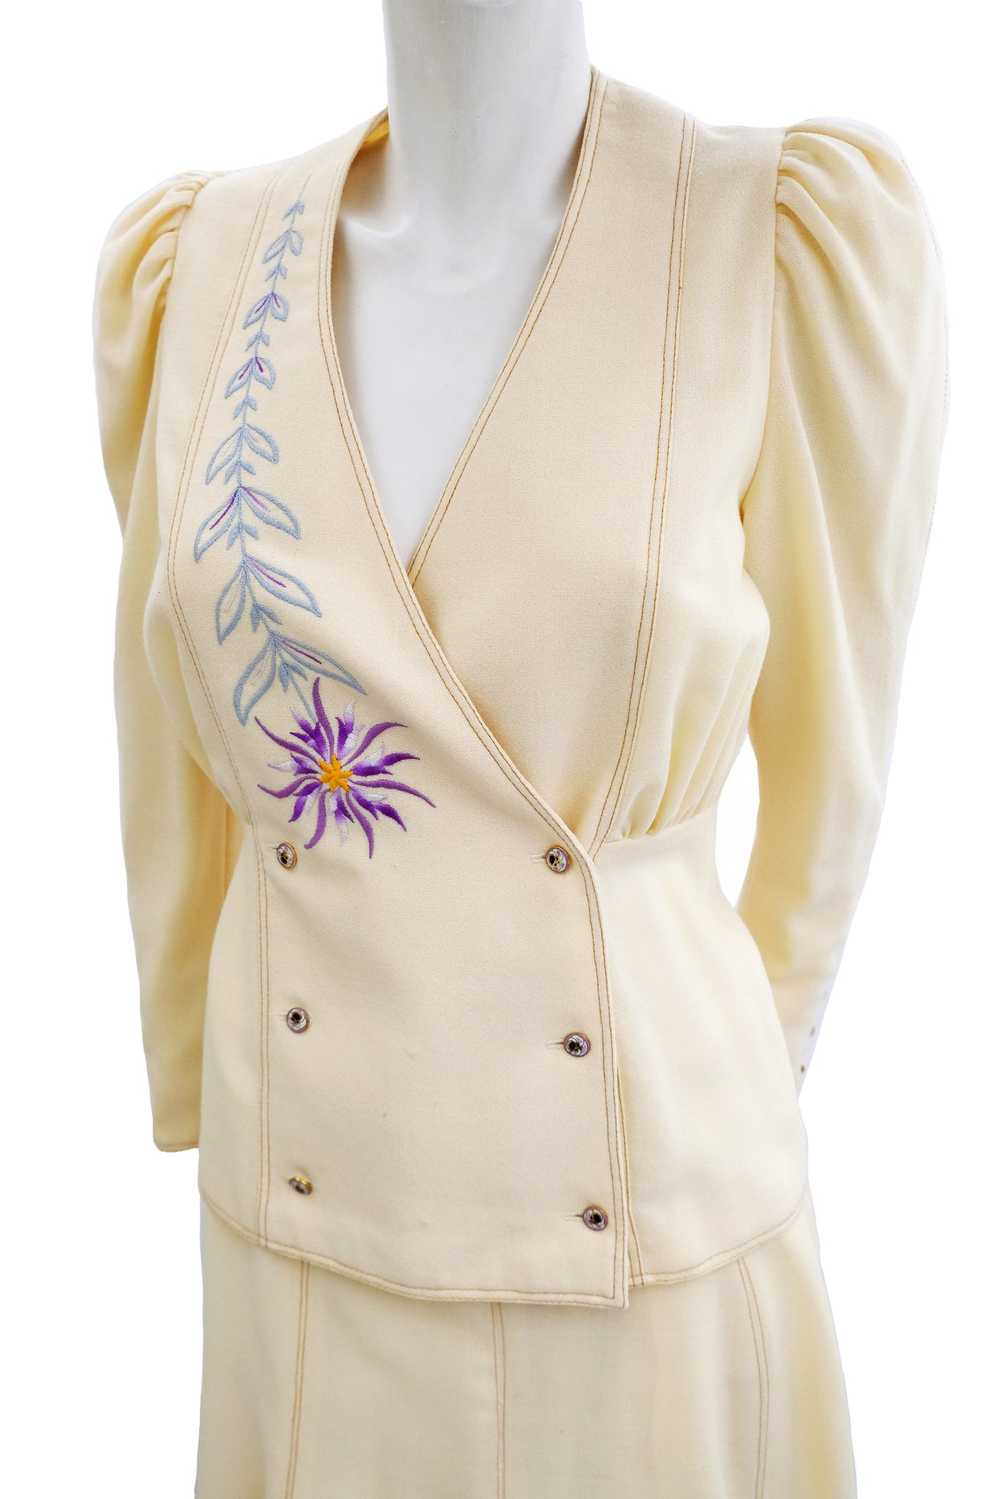 Bill Gibb Vintage Skirt Suit in Cream Wool Crepe … - image 2